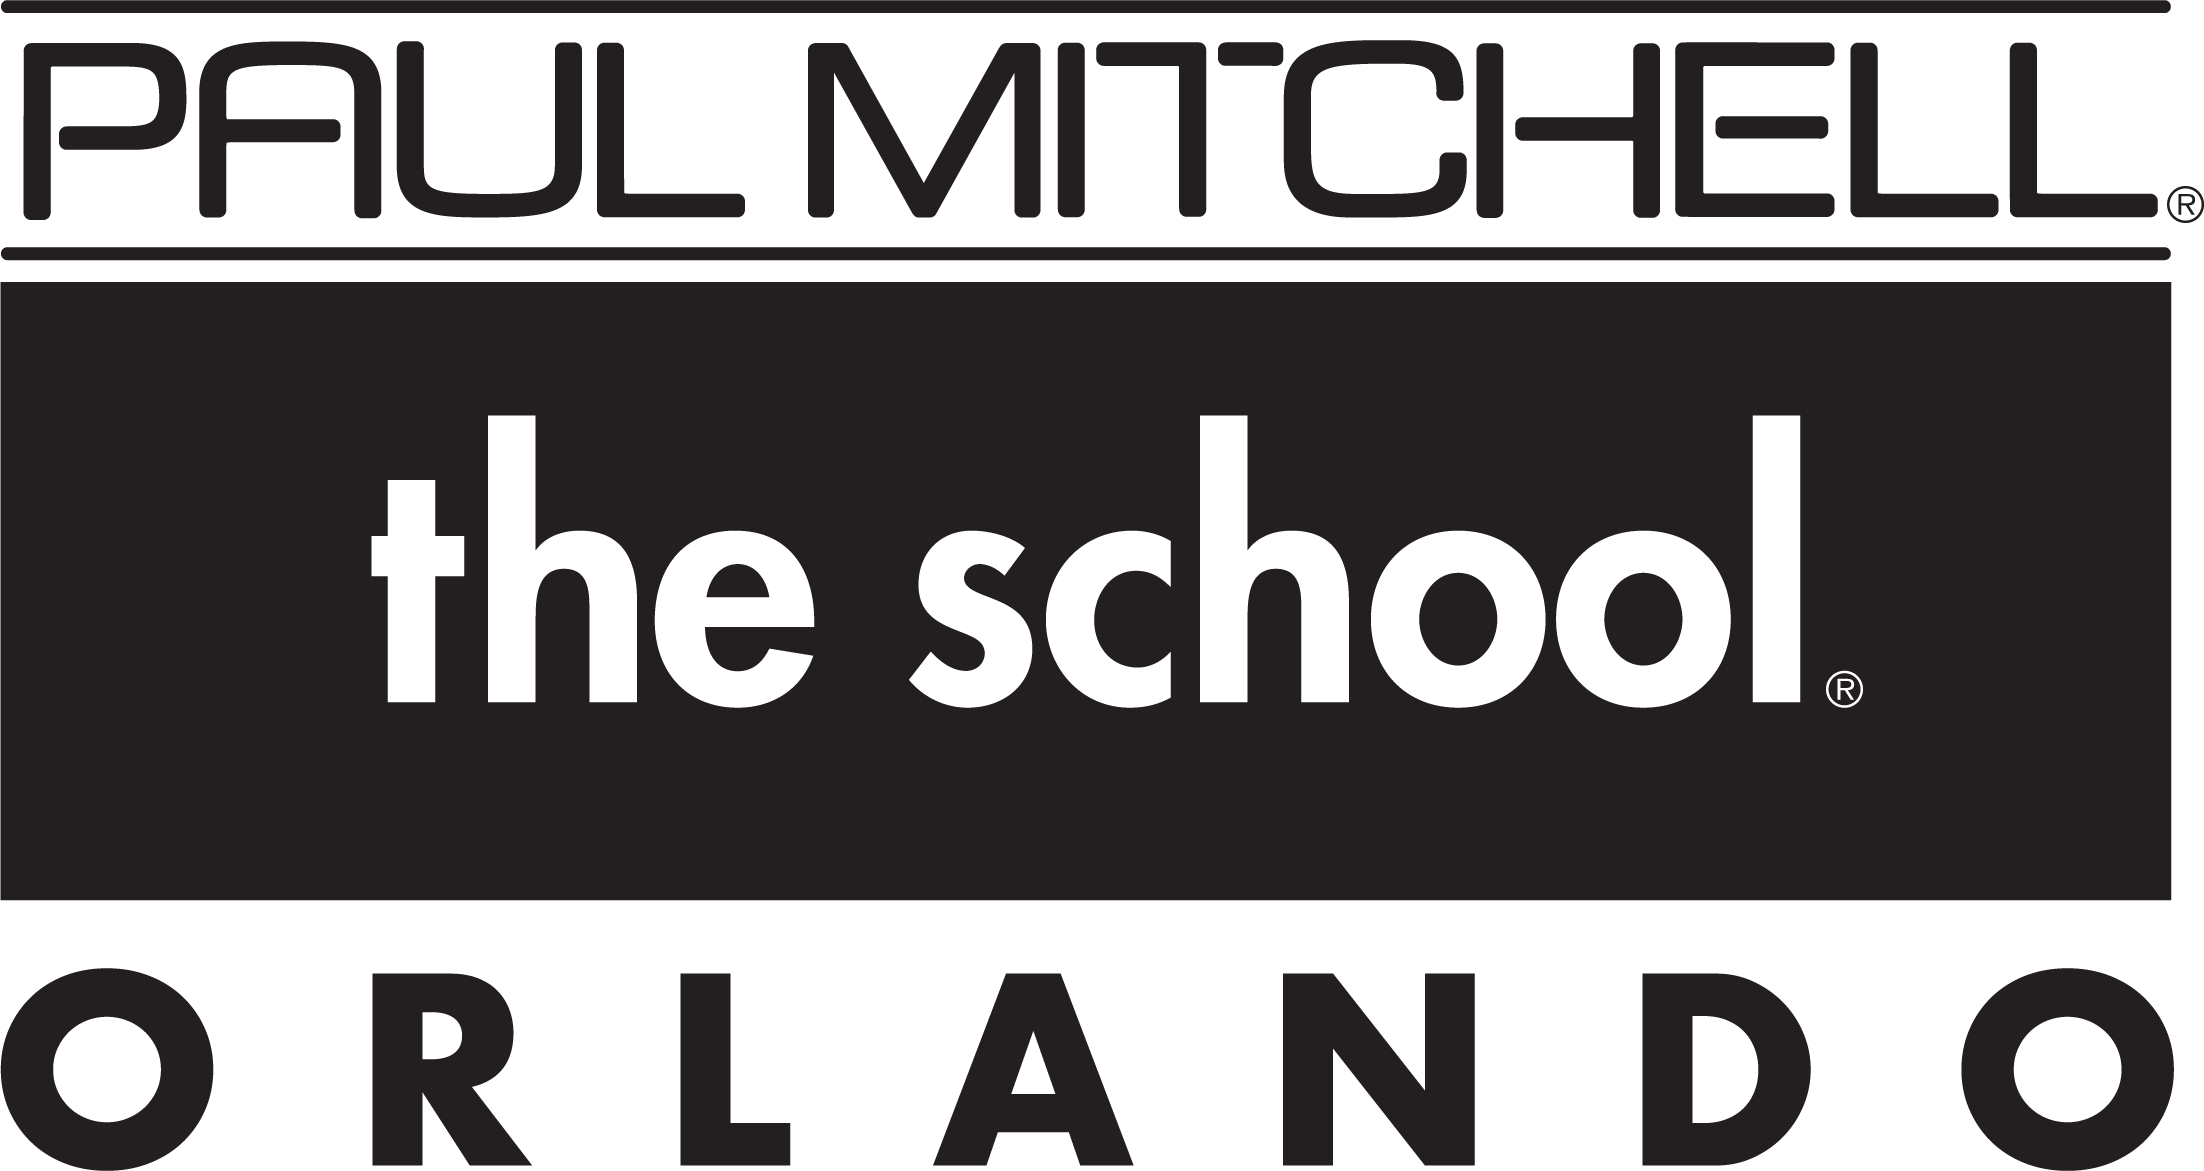 Paul Mitchell Schools catalog